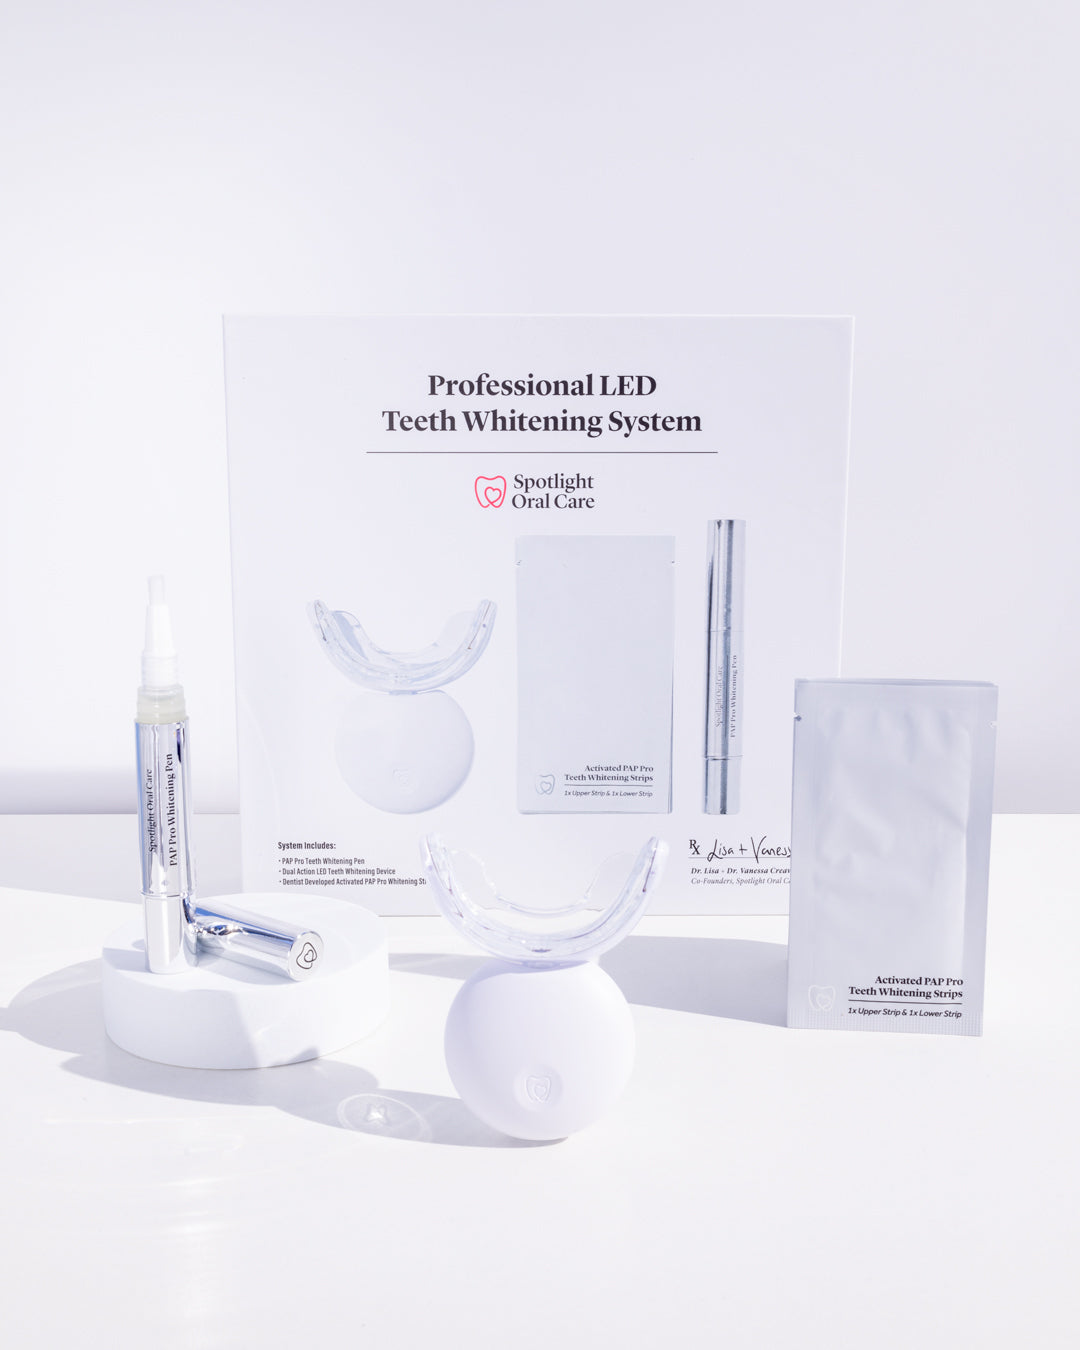 Professional LED Teeth Whitening System